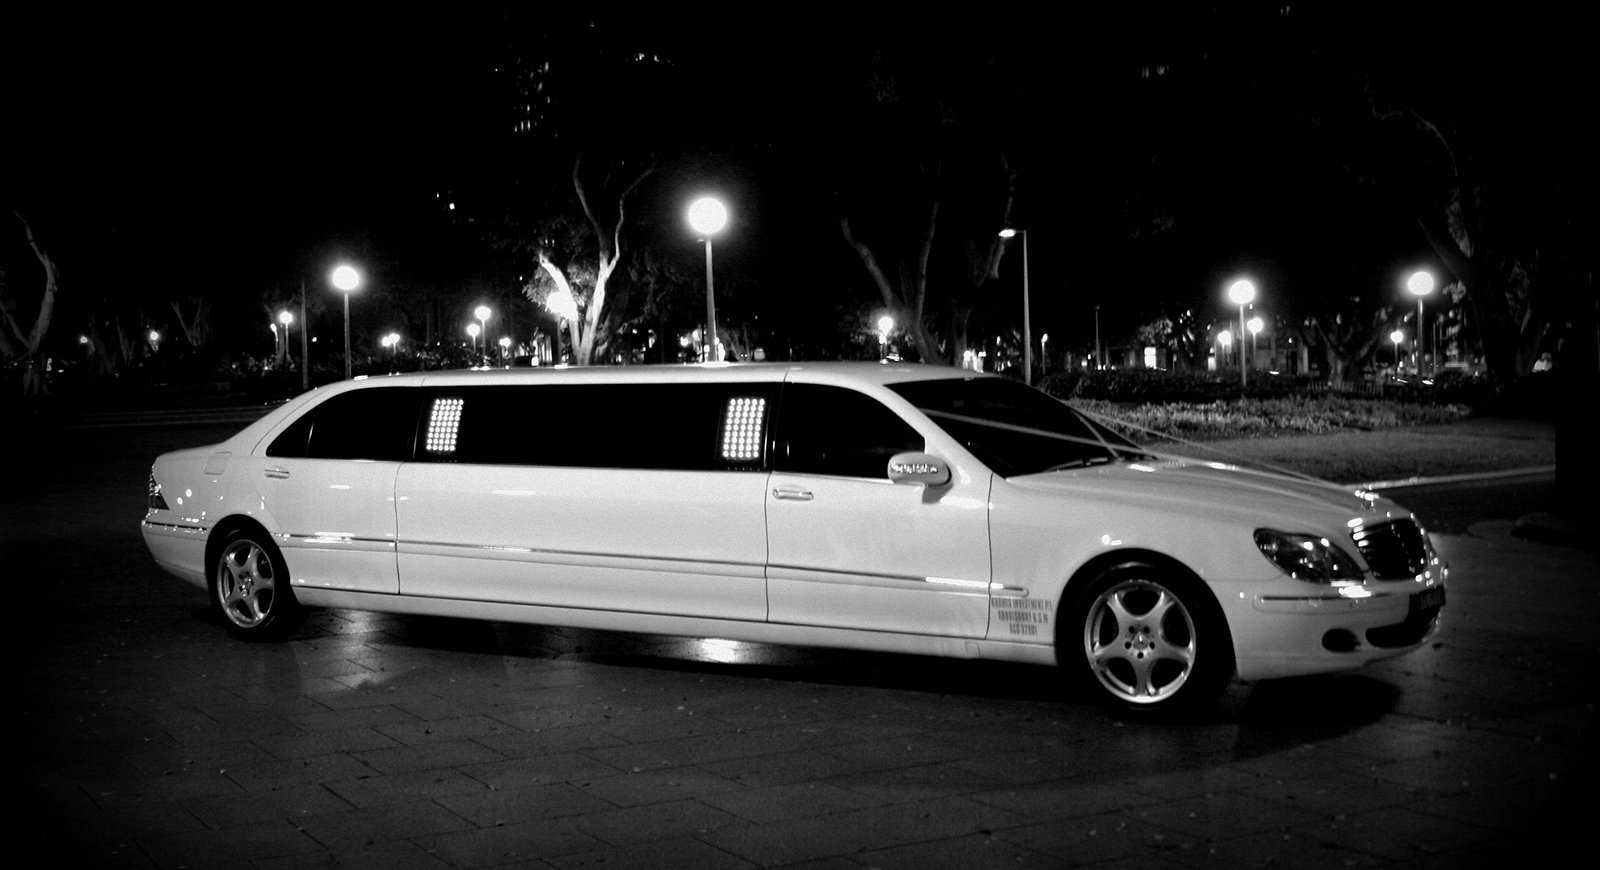 wedding limousines hire sydney